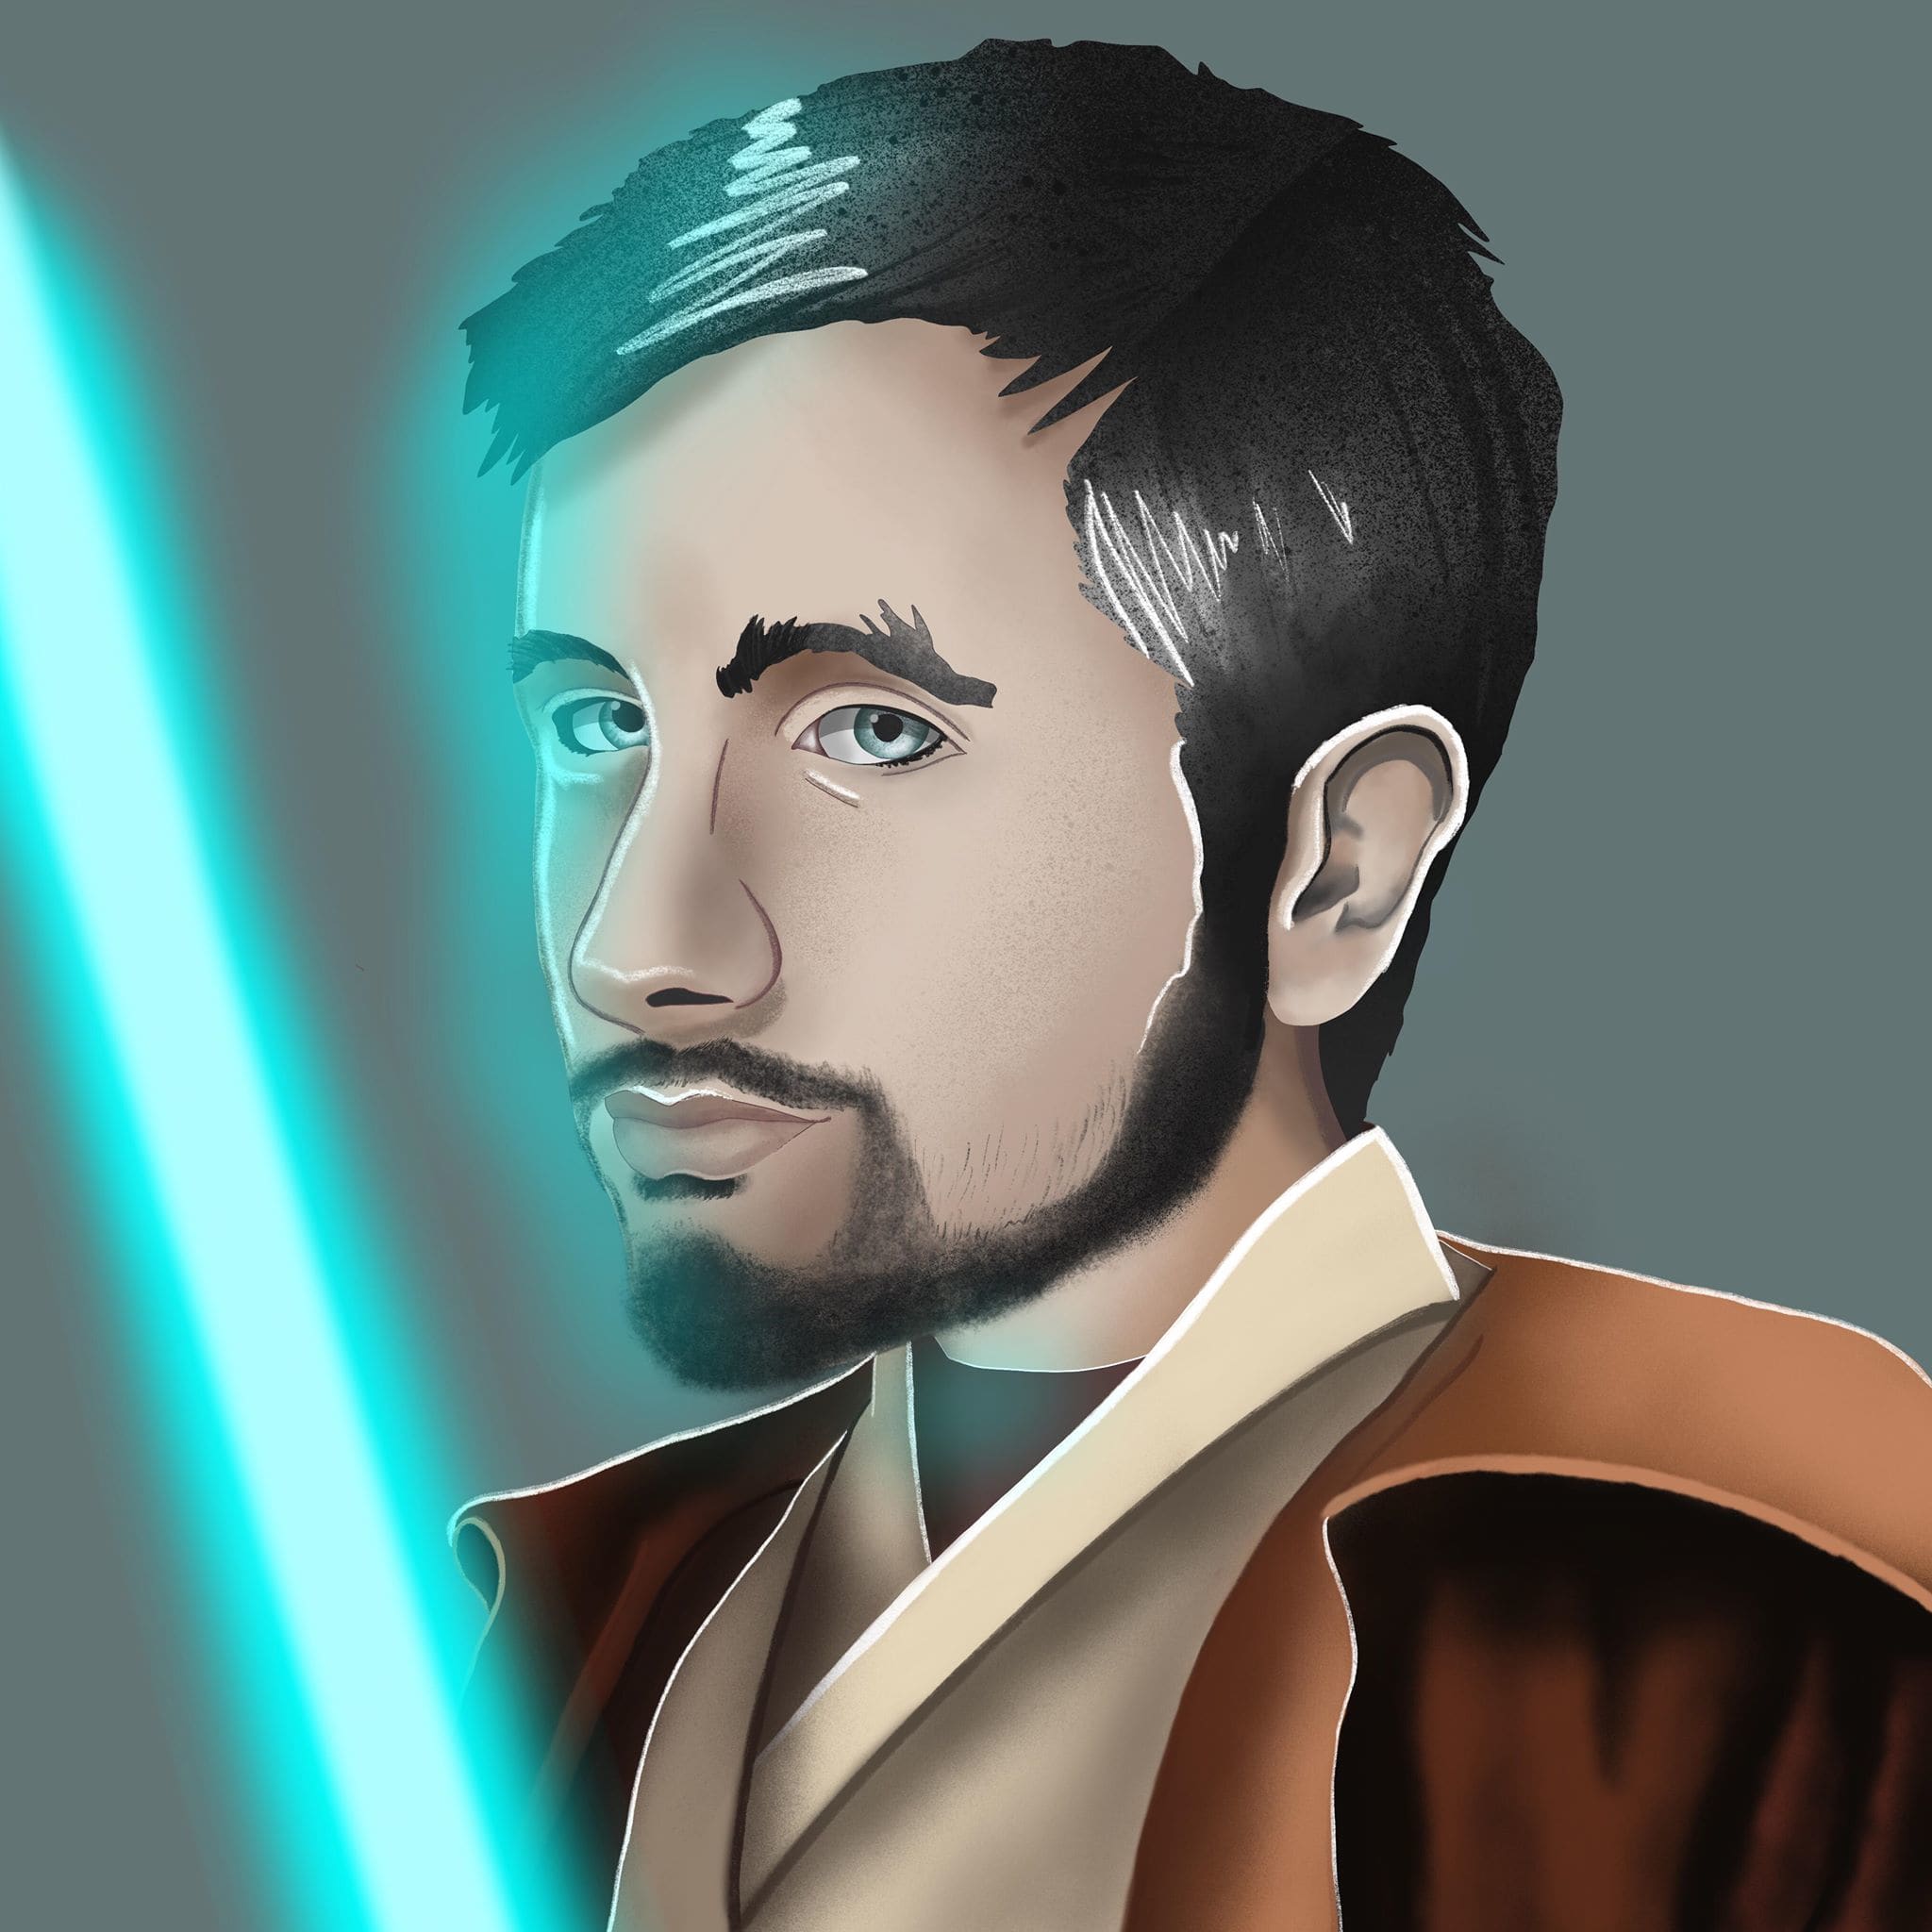 Make Me Jedi - Turn Into A Star Wars Caricature!